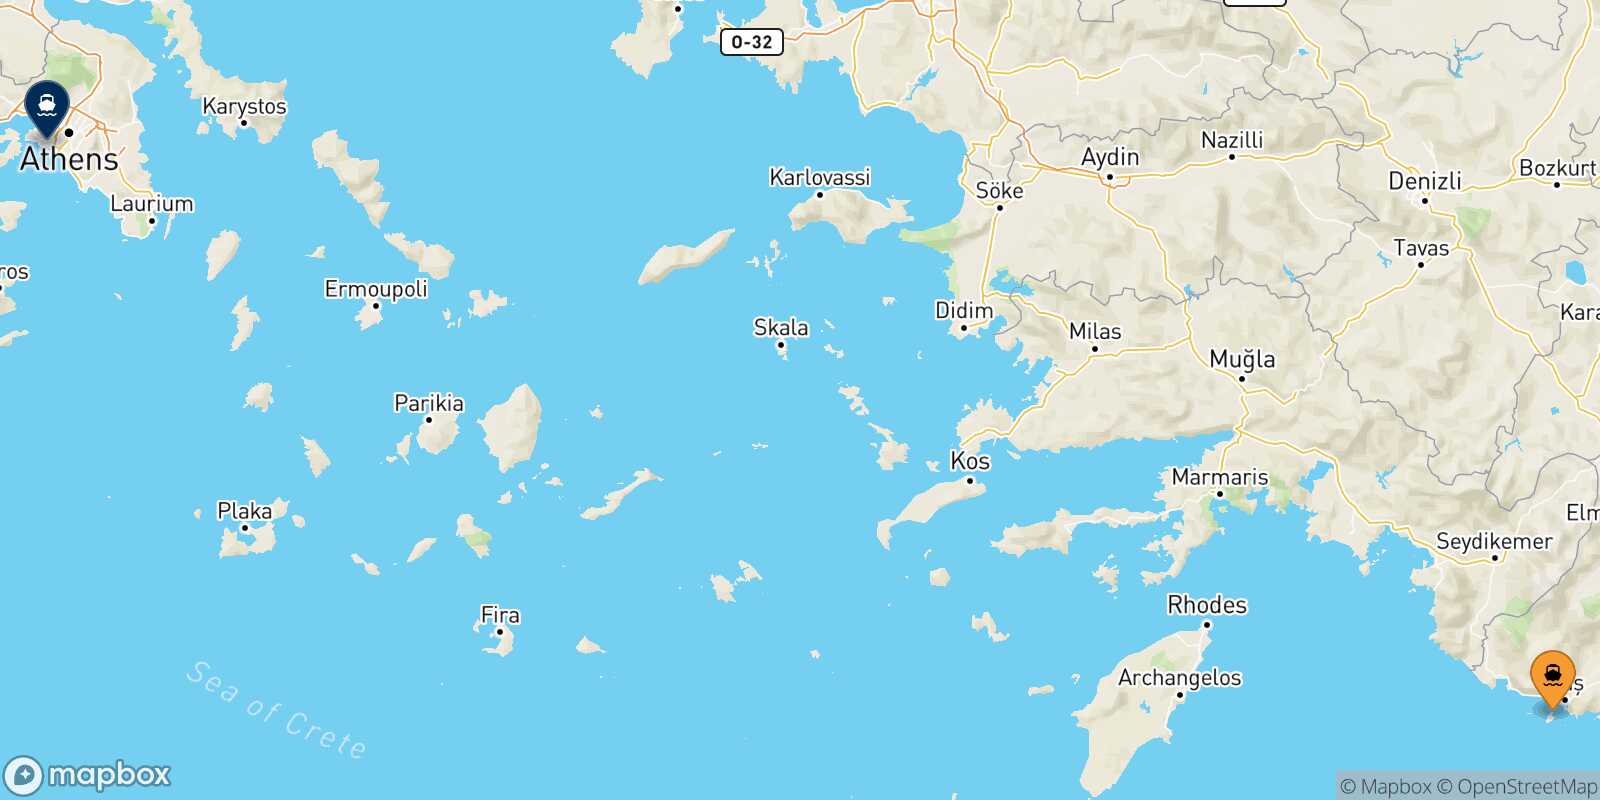 Kastelorizo Piraeus route map